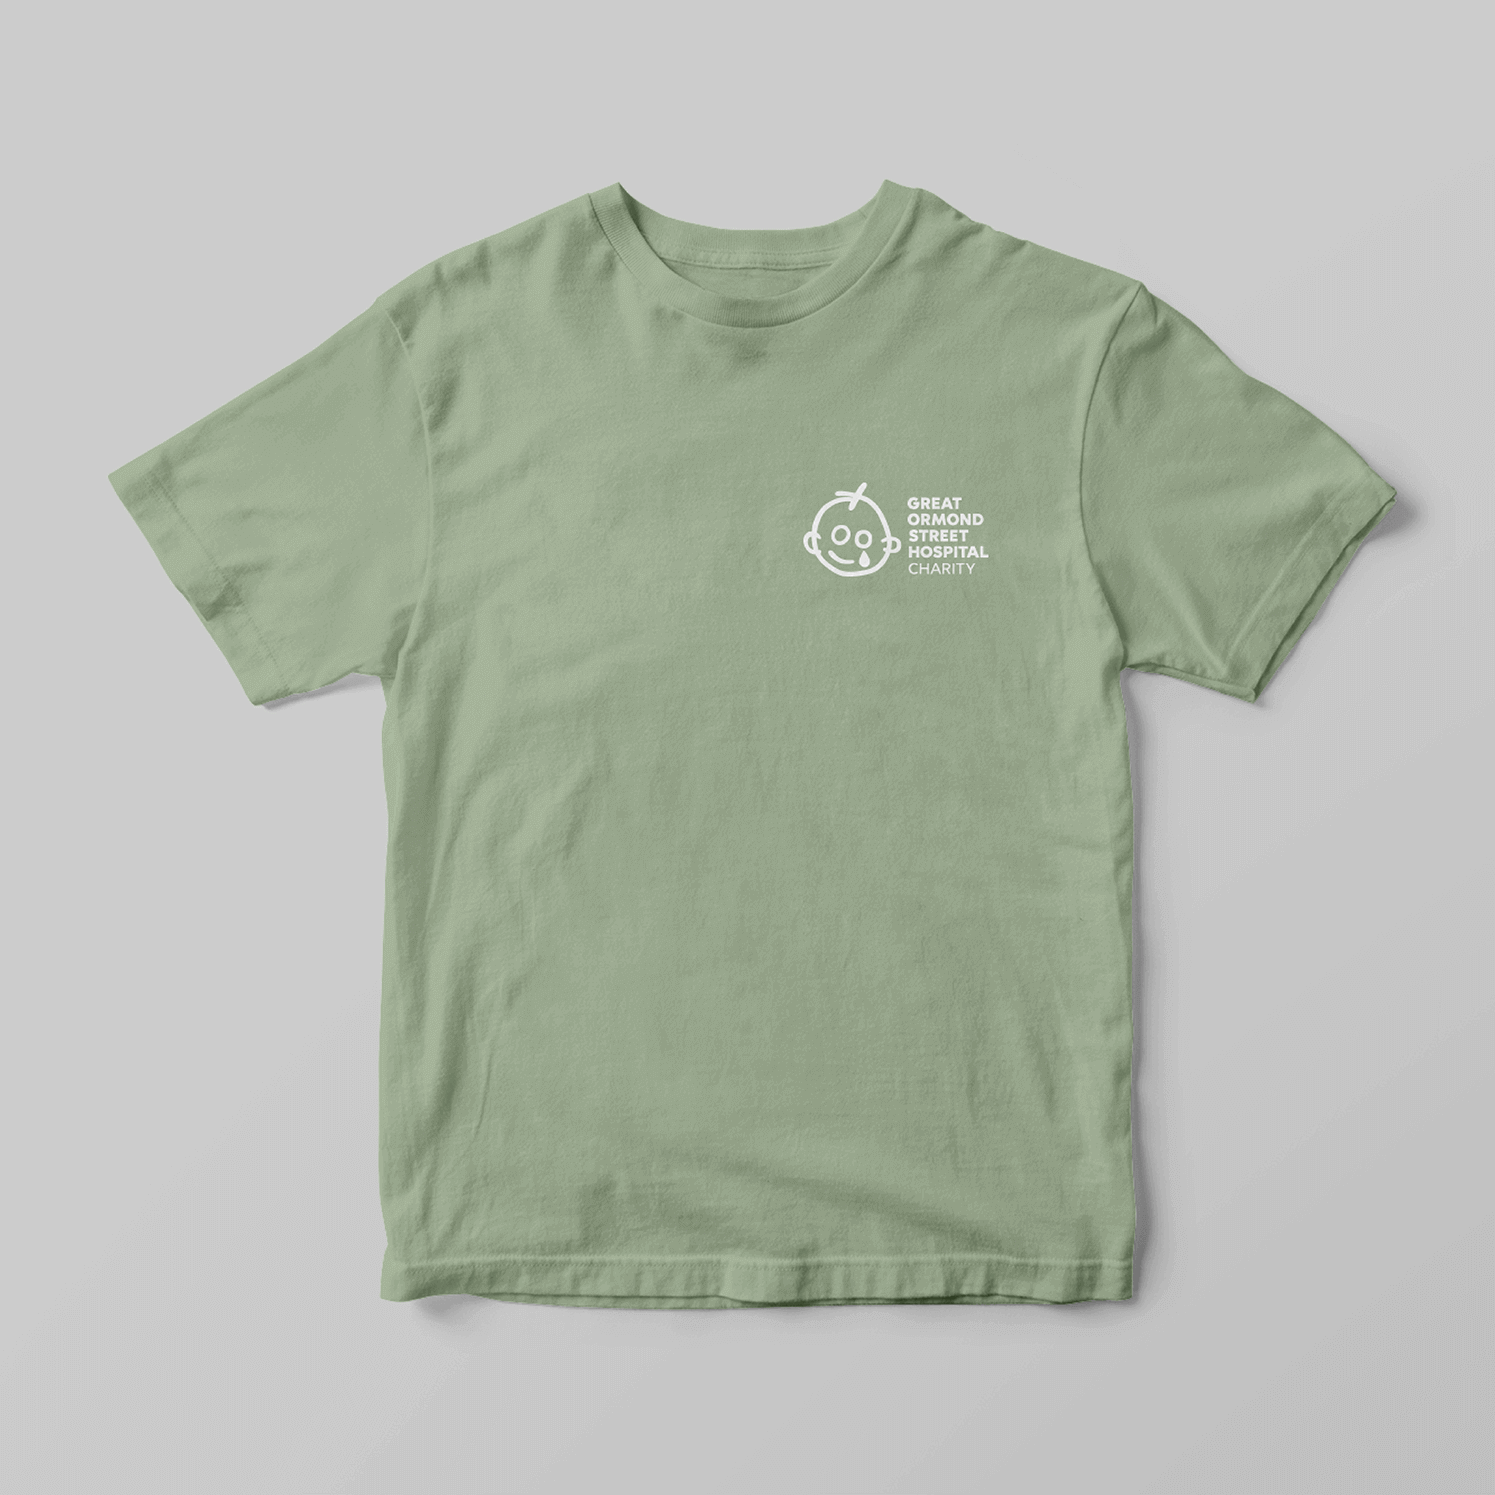 Green GOSH Logo T-shirt in unisex adult